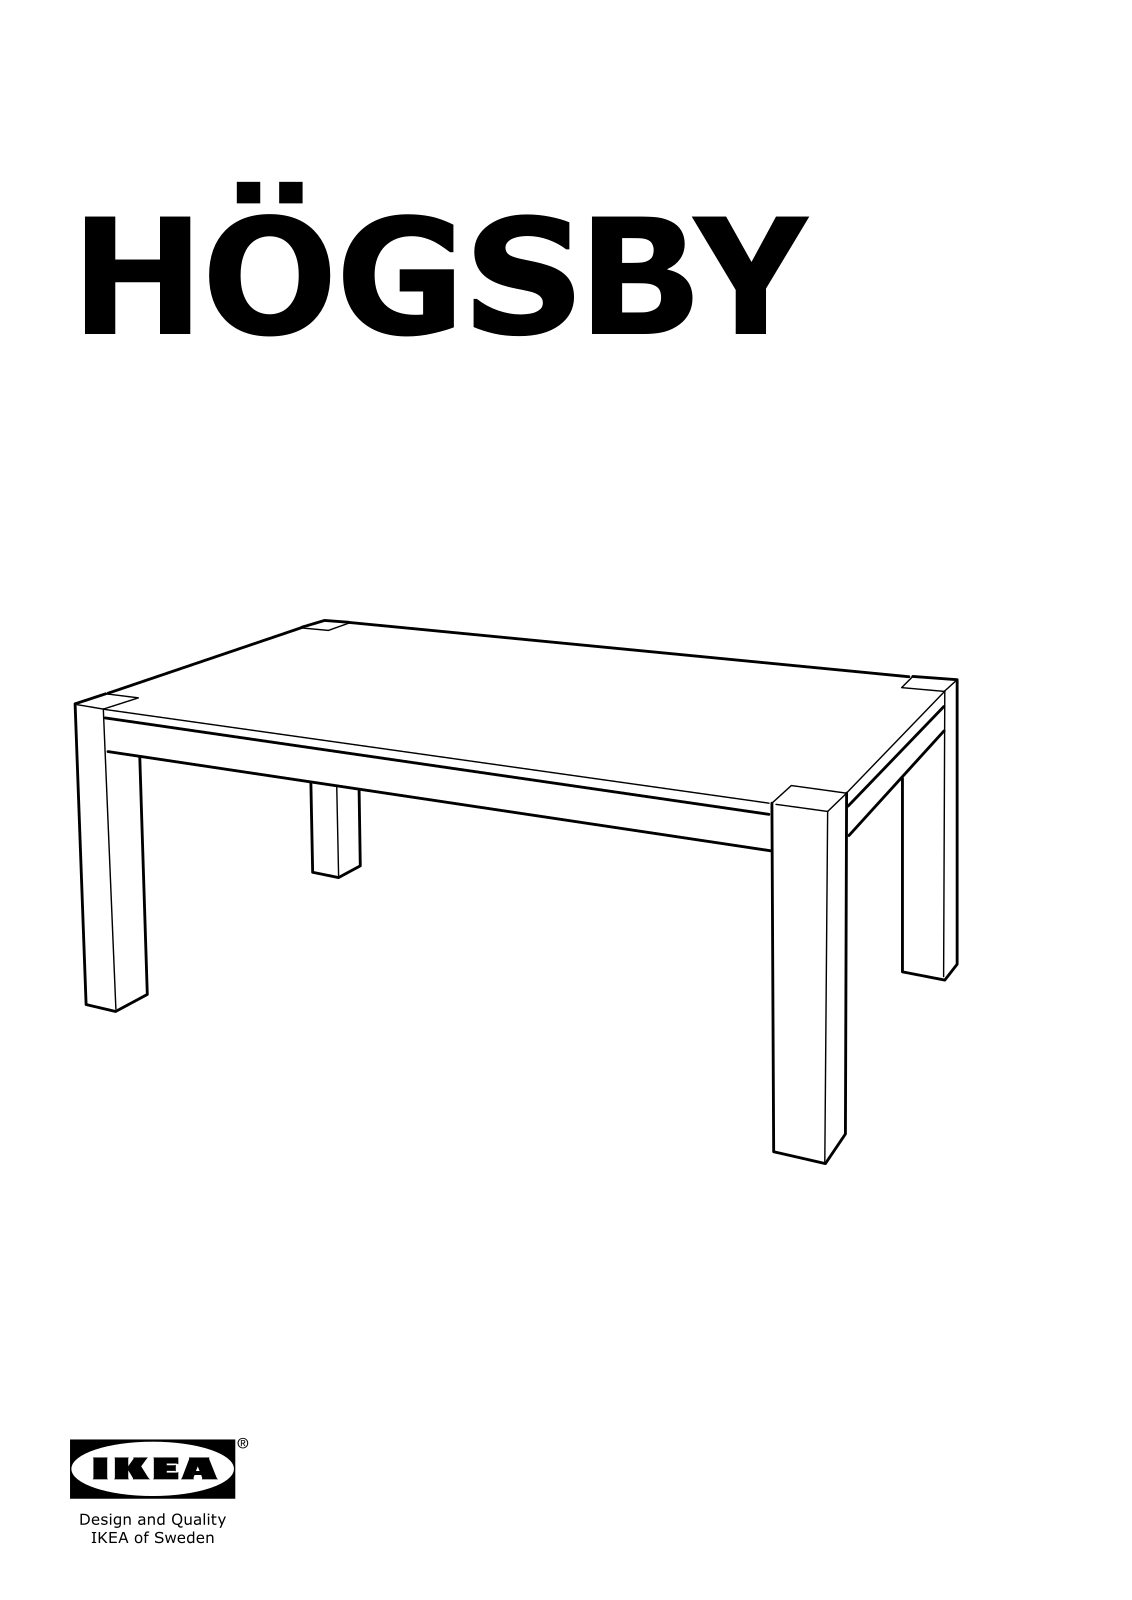 IKEA HOGSBY User Manual